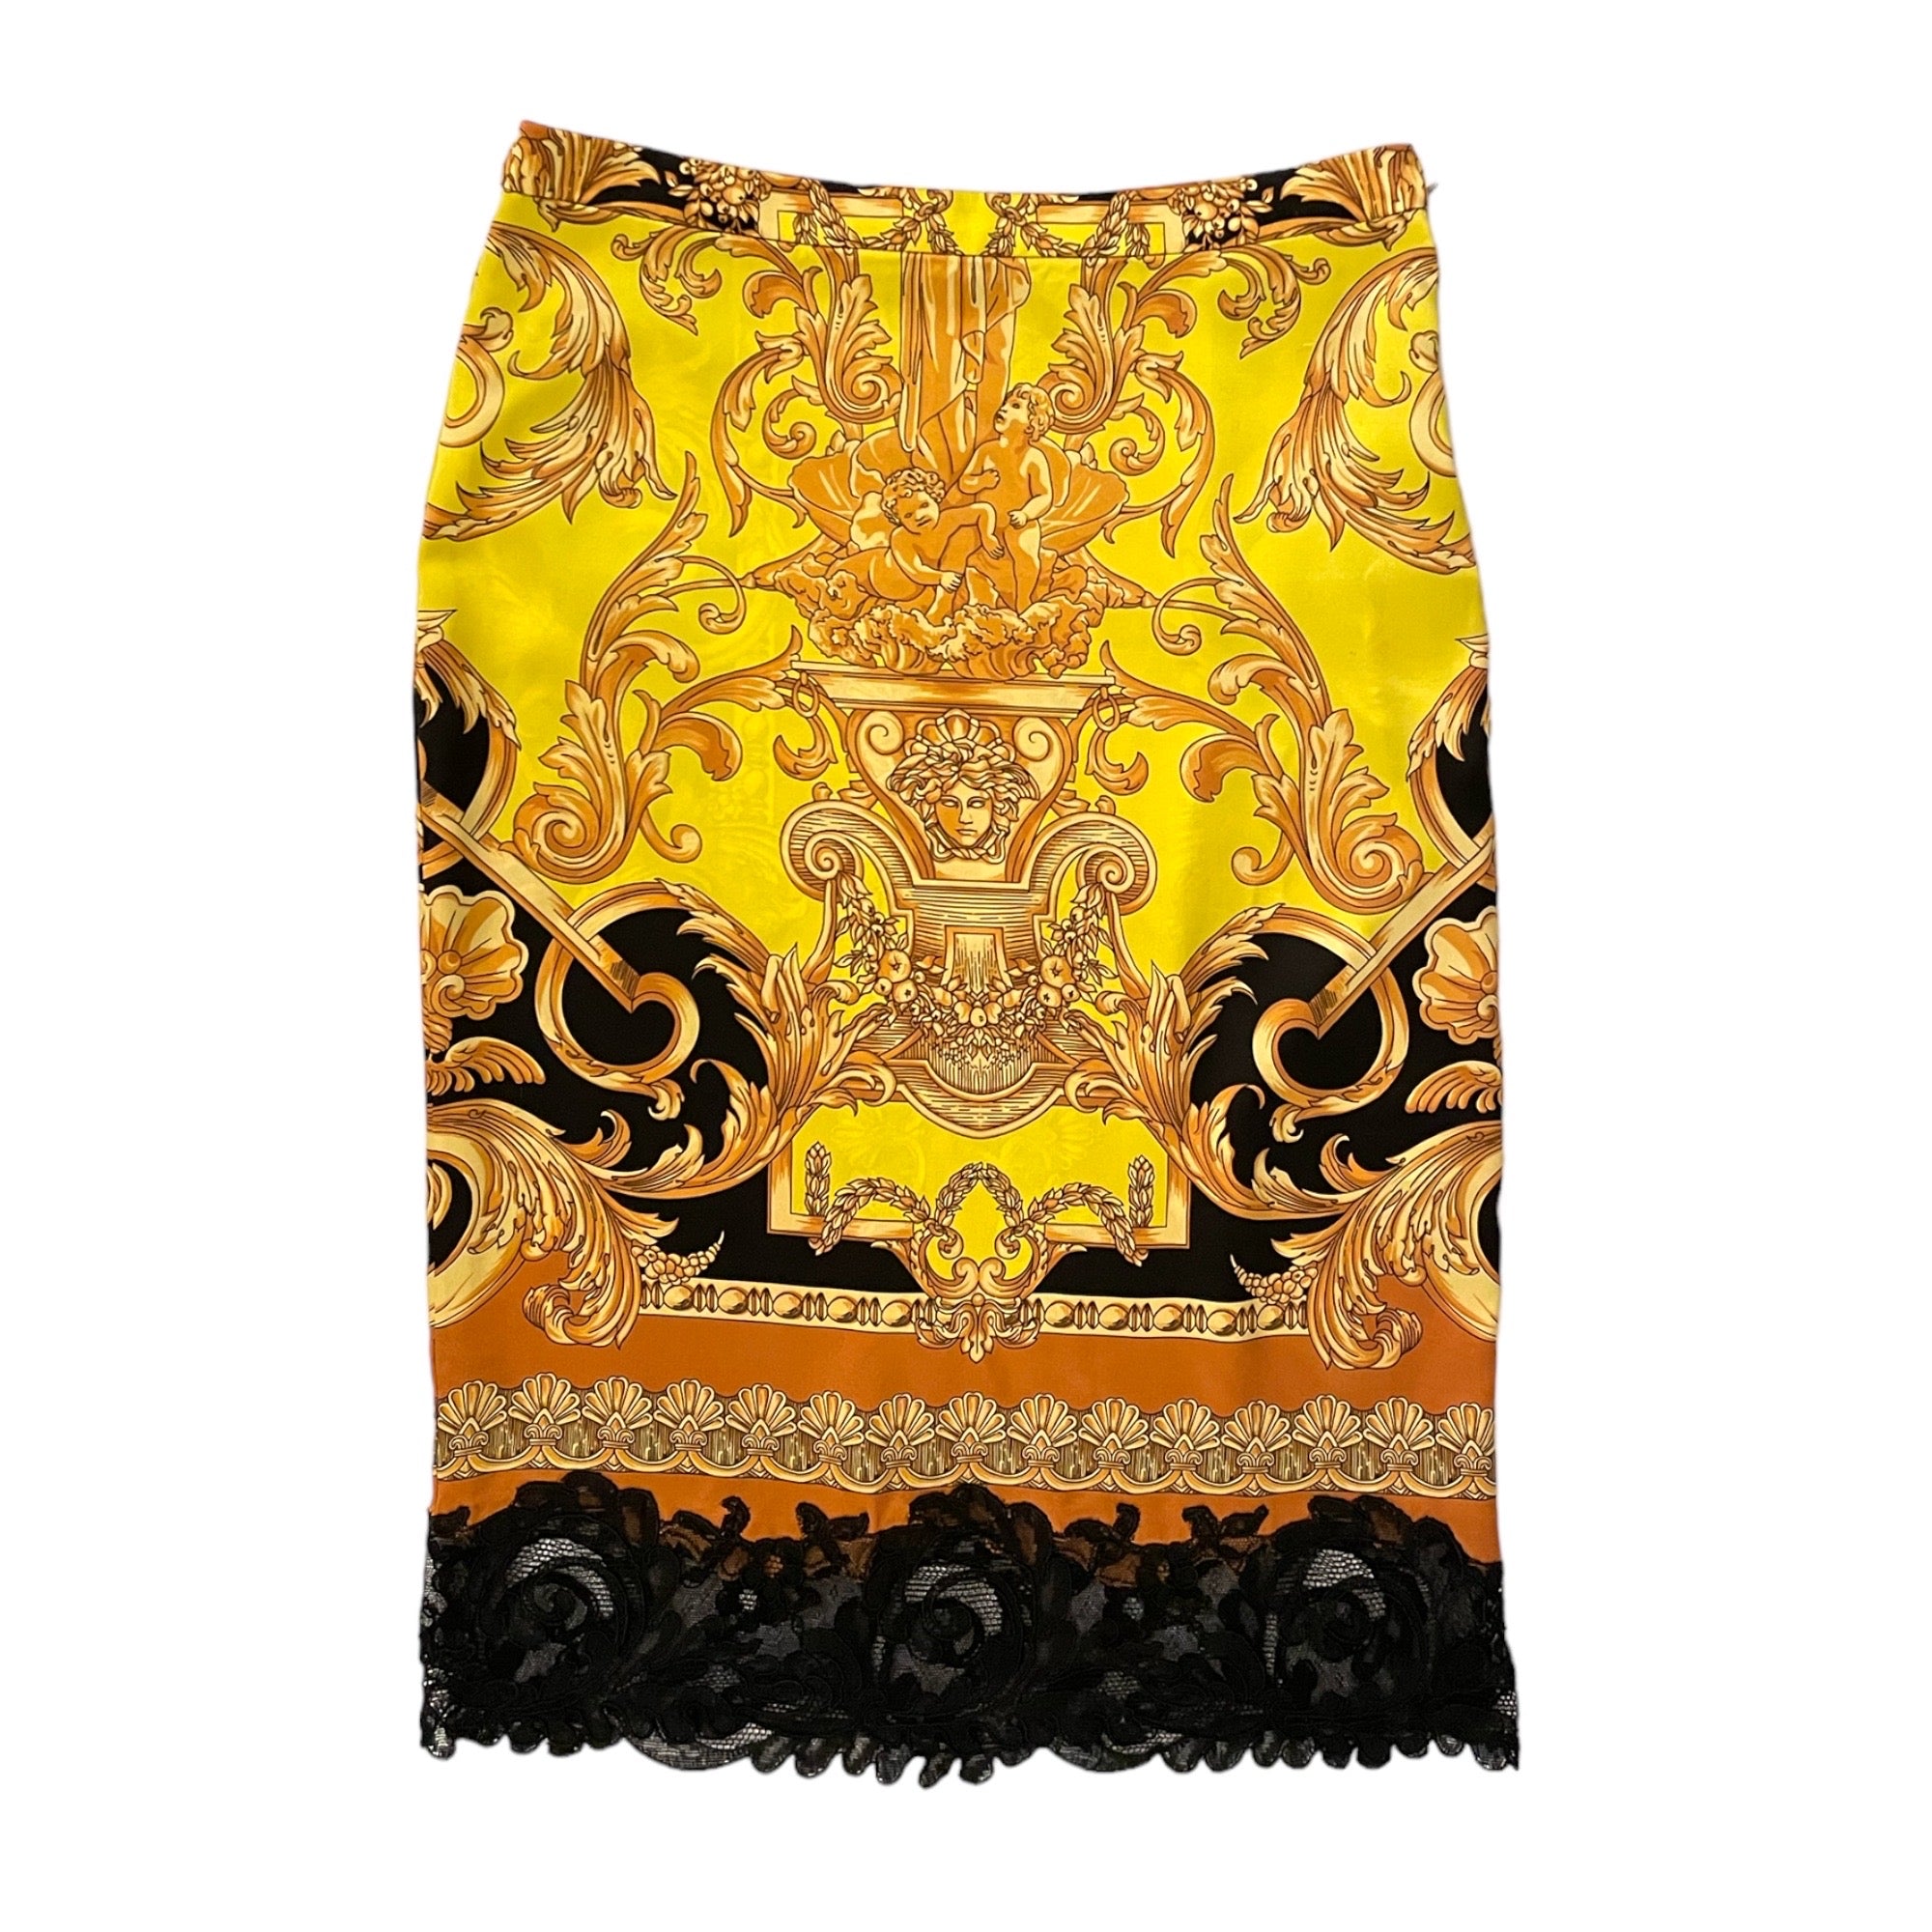 VERSACE Silk Knee-Length Skirt
| Size: XS | US2, IT38 |